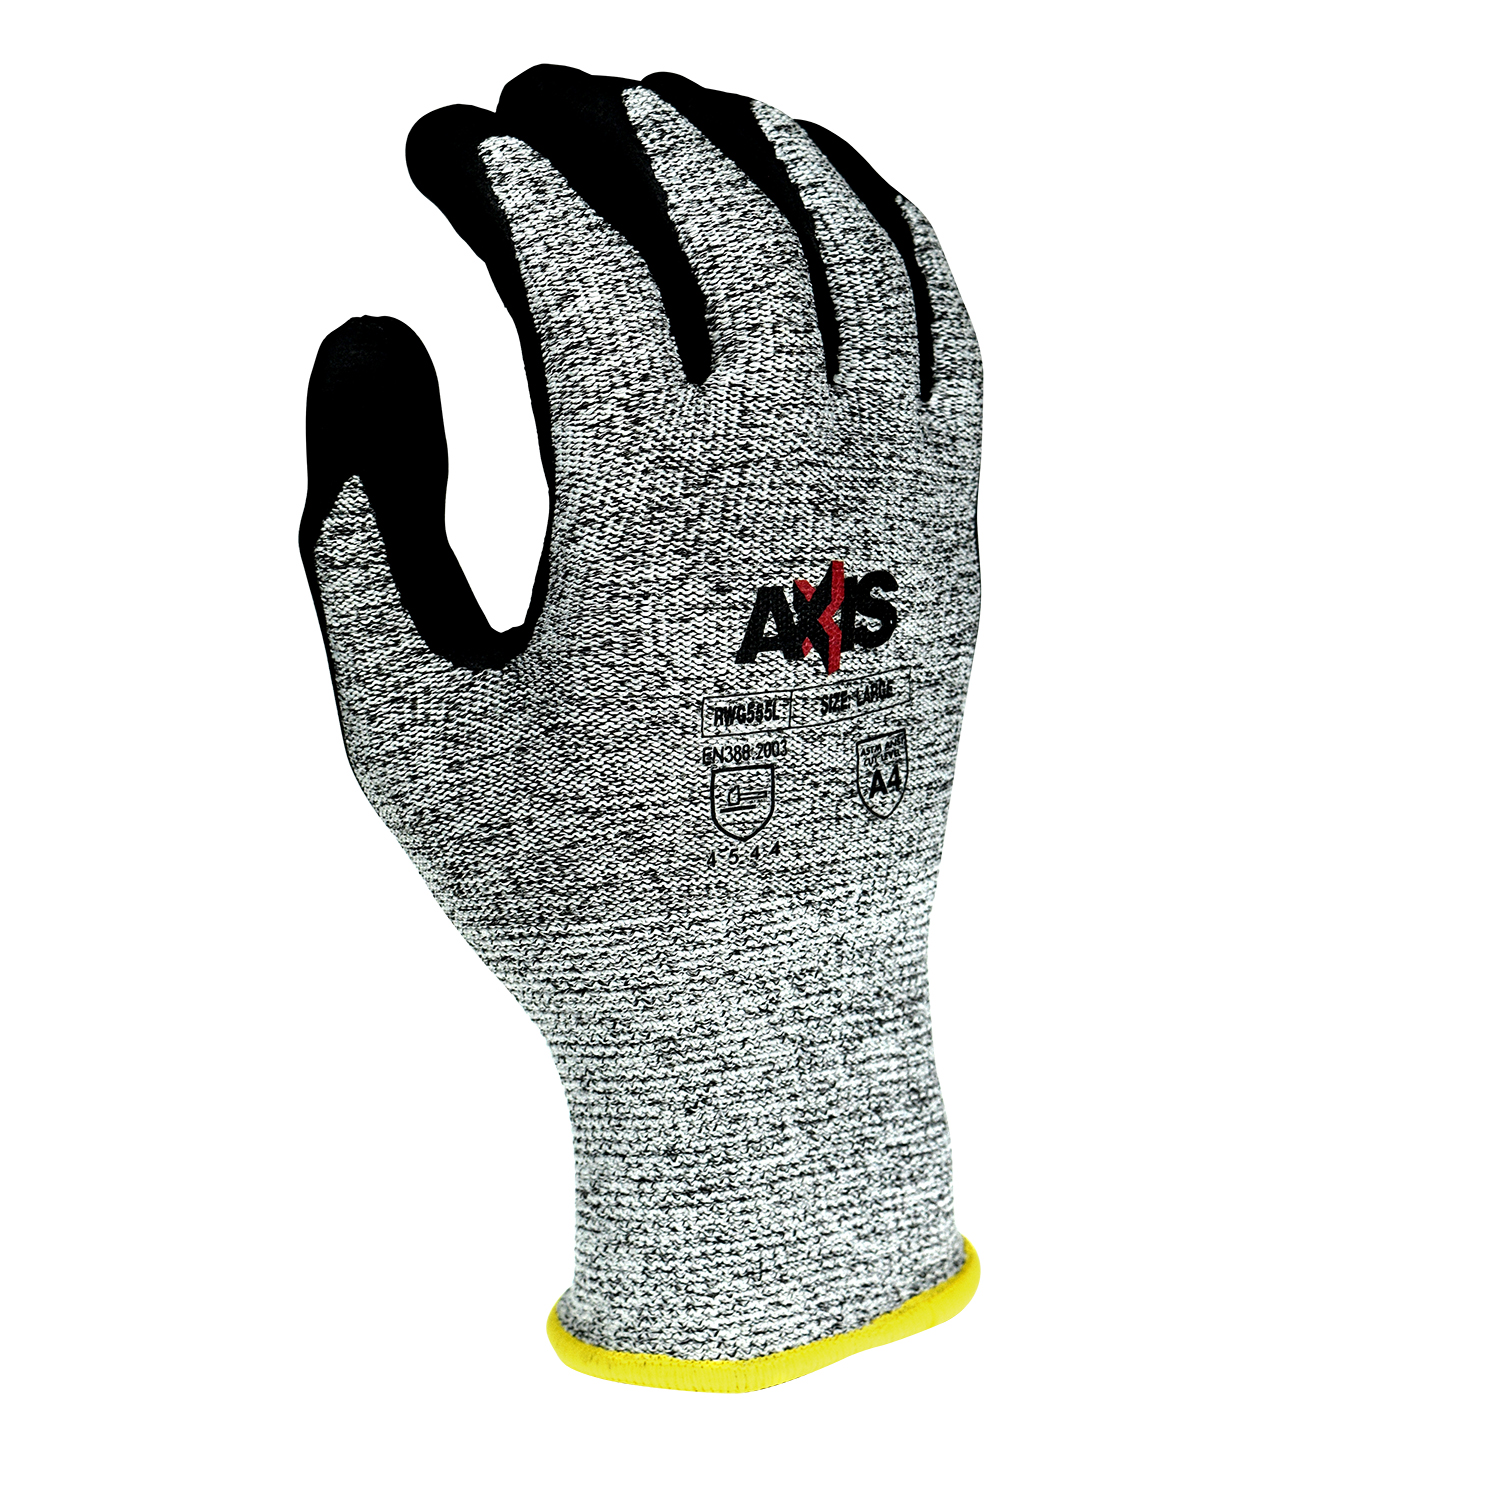 Gloves Cut Resistant Level 5 Large